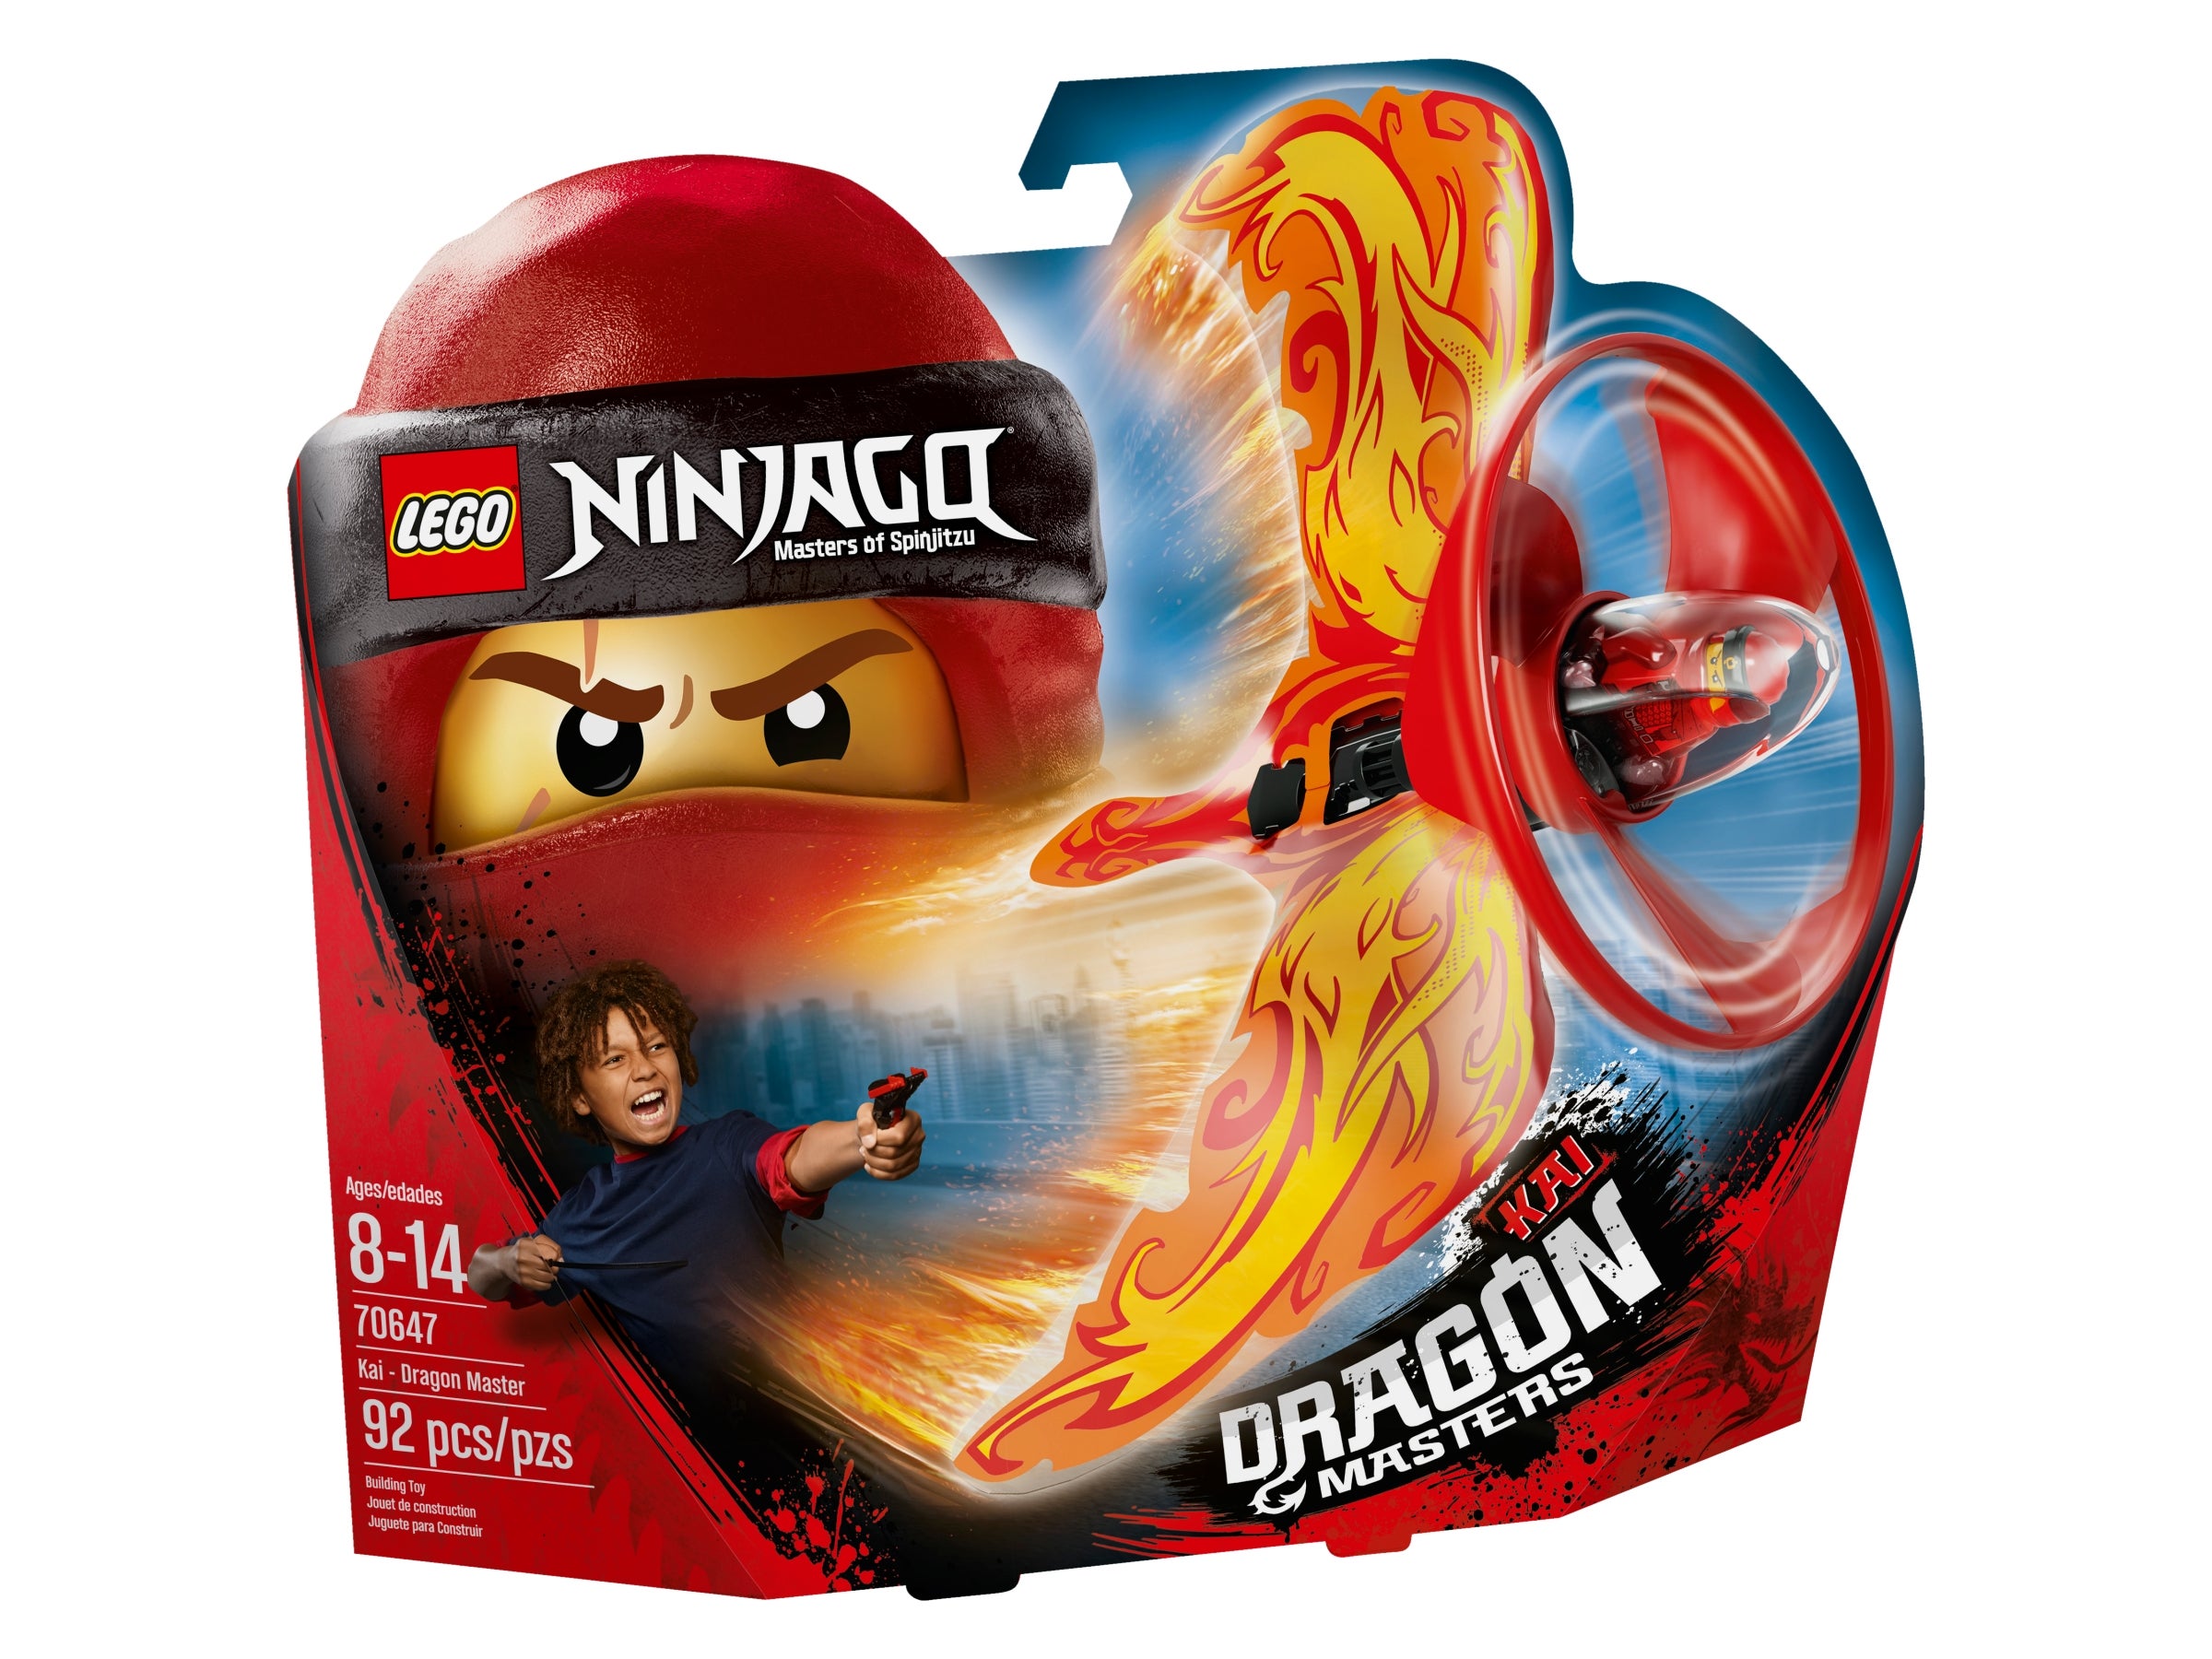 LEGO Ninjago 70646 Jay Dragon Master 92pcs 2018 for sale online